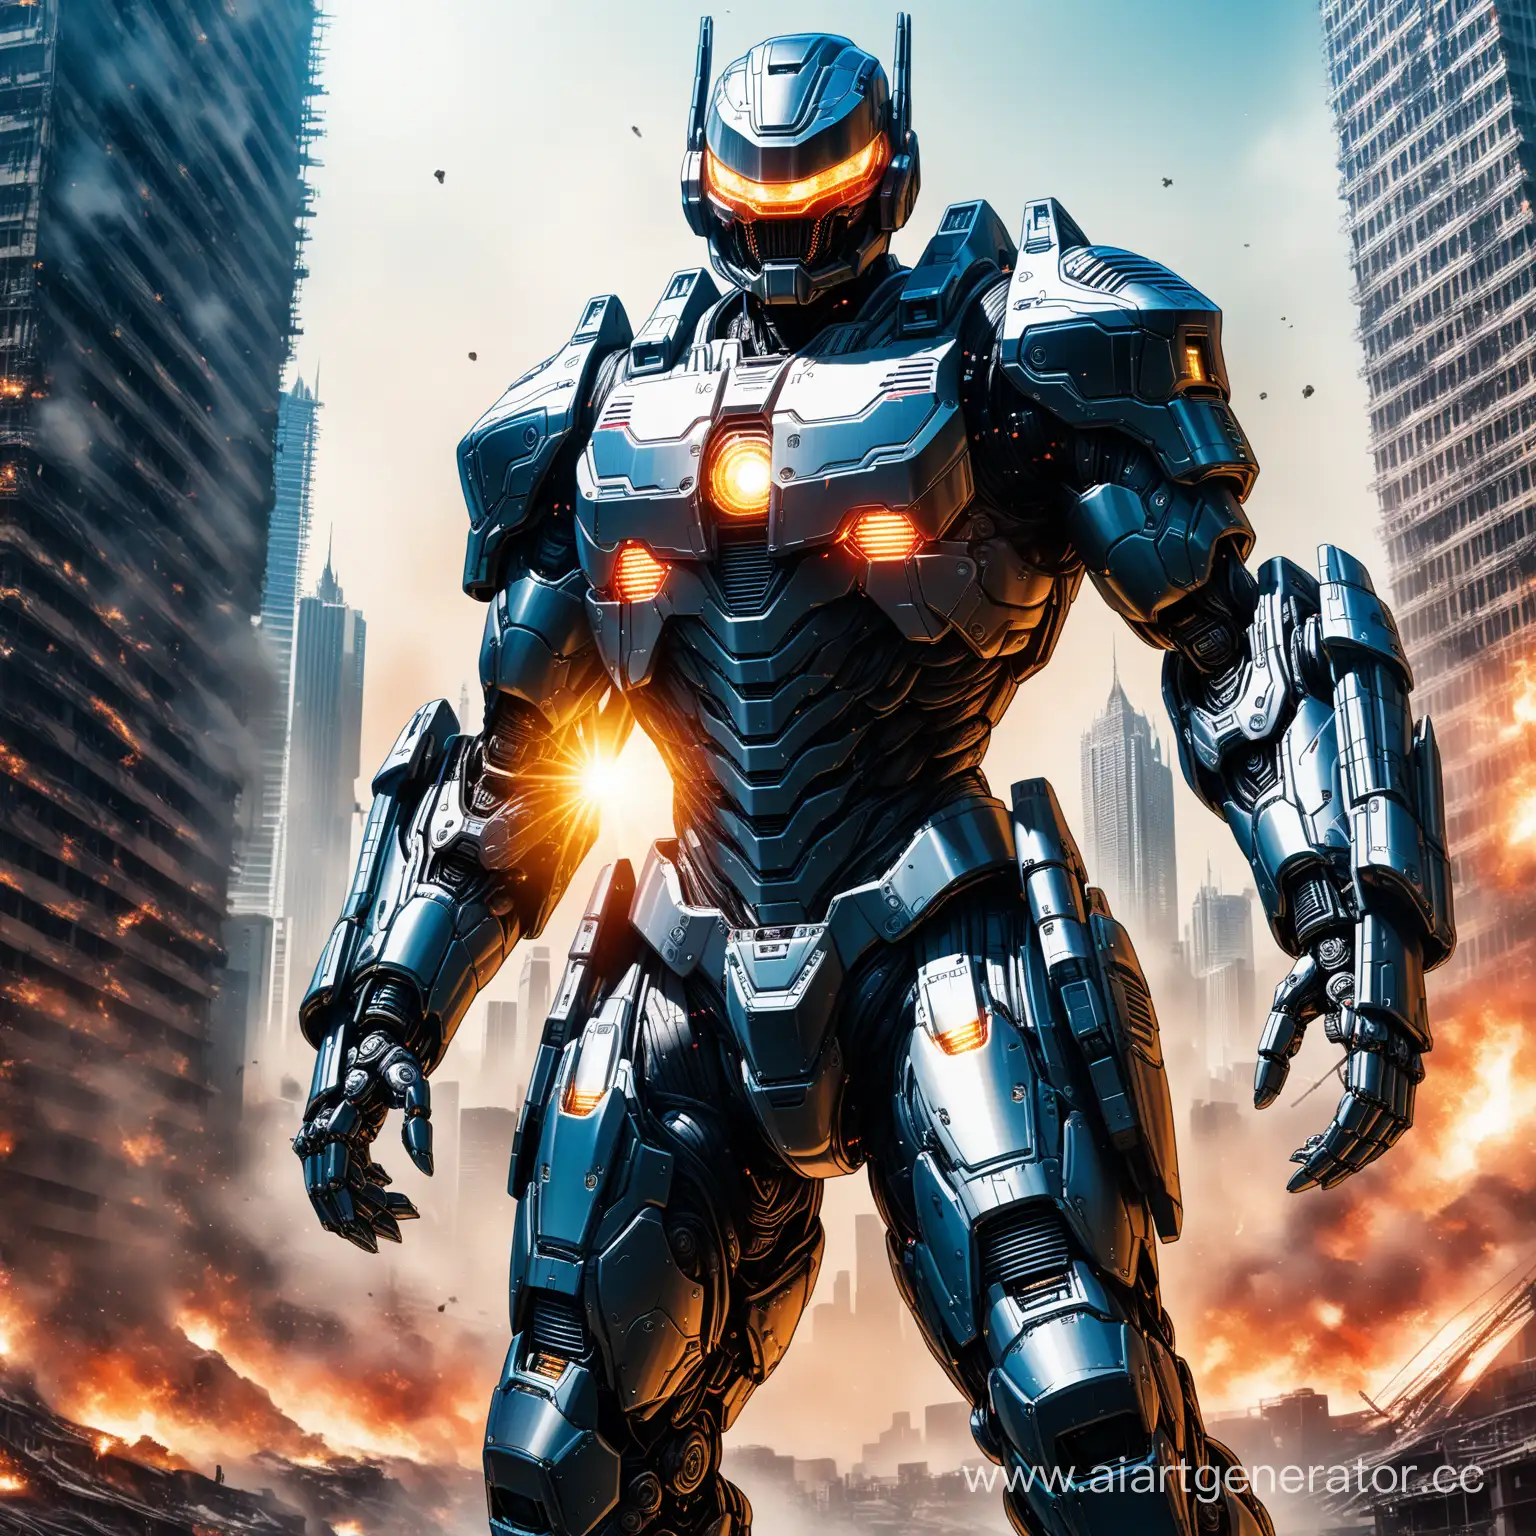 Ethereal-Demonic-Robocop-Suit-Powerful-Armor-in-a-Futuristic-Cityscape